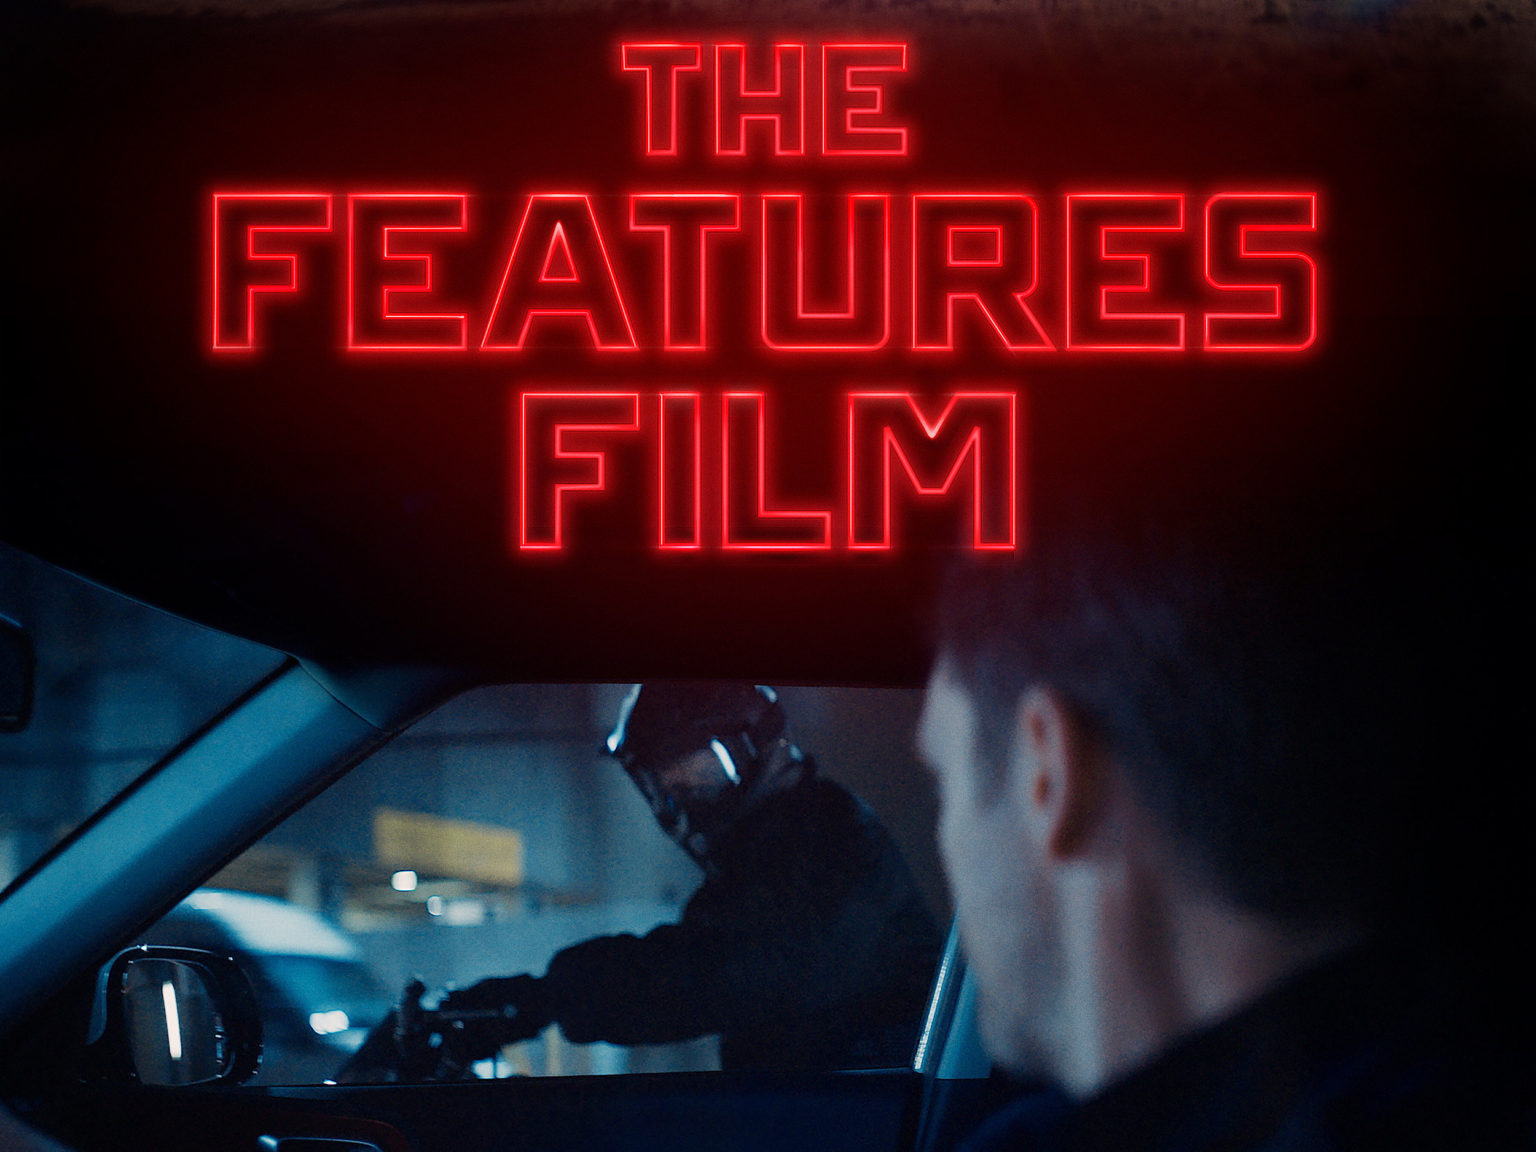 “The Features Film” showcases the Kia lineup